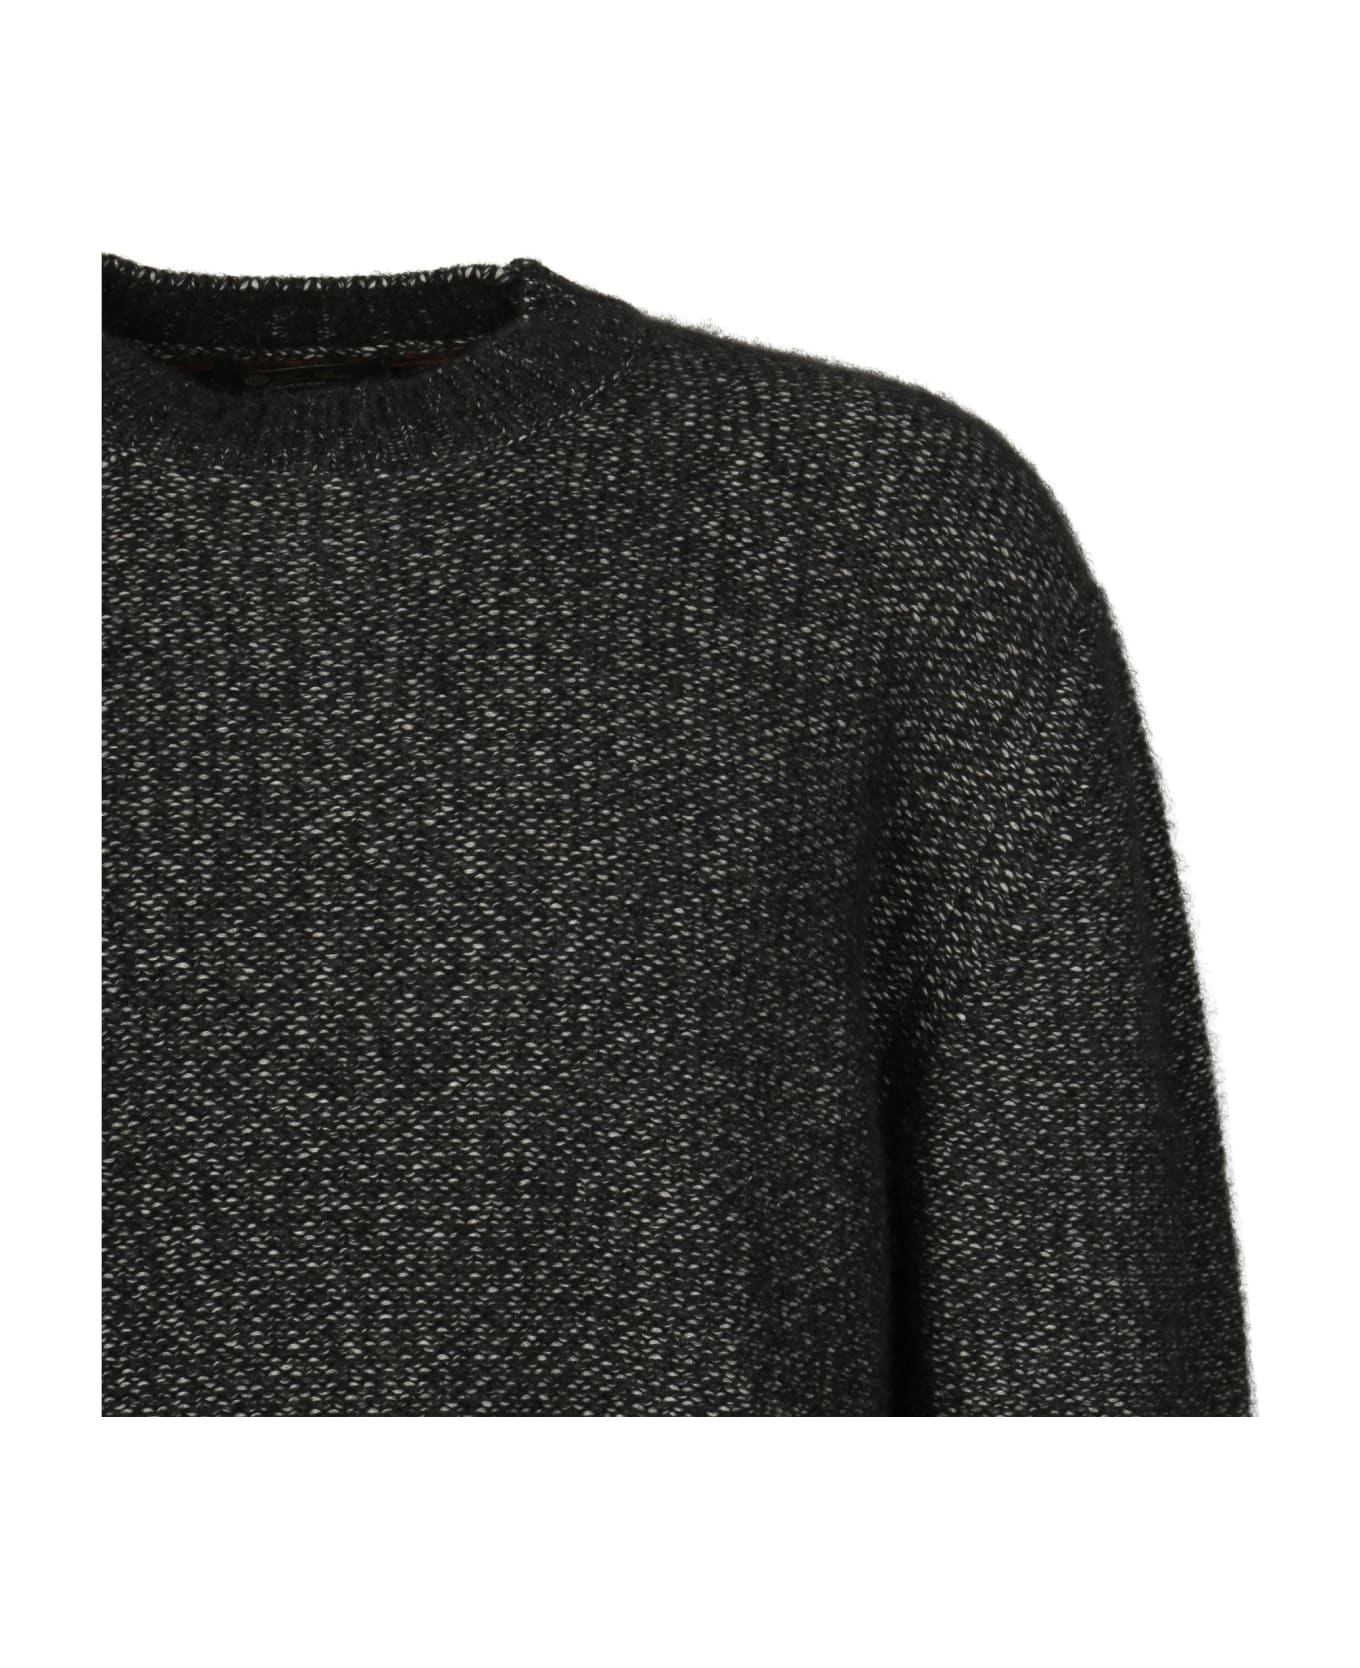 Loro Piana Dunstan Sweater - Black